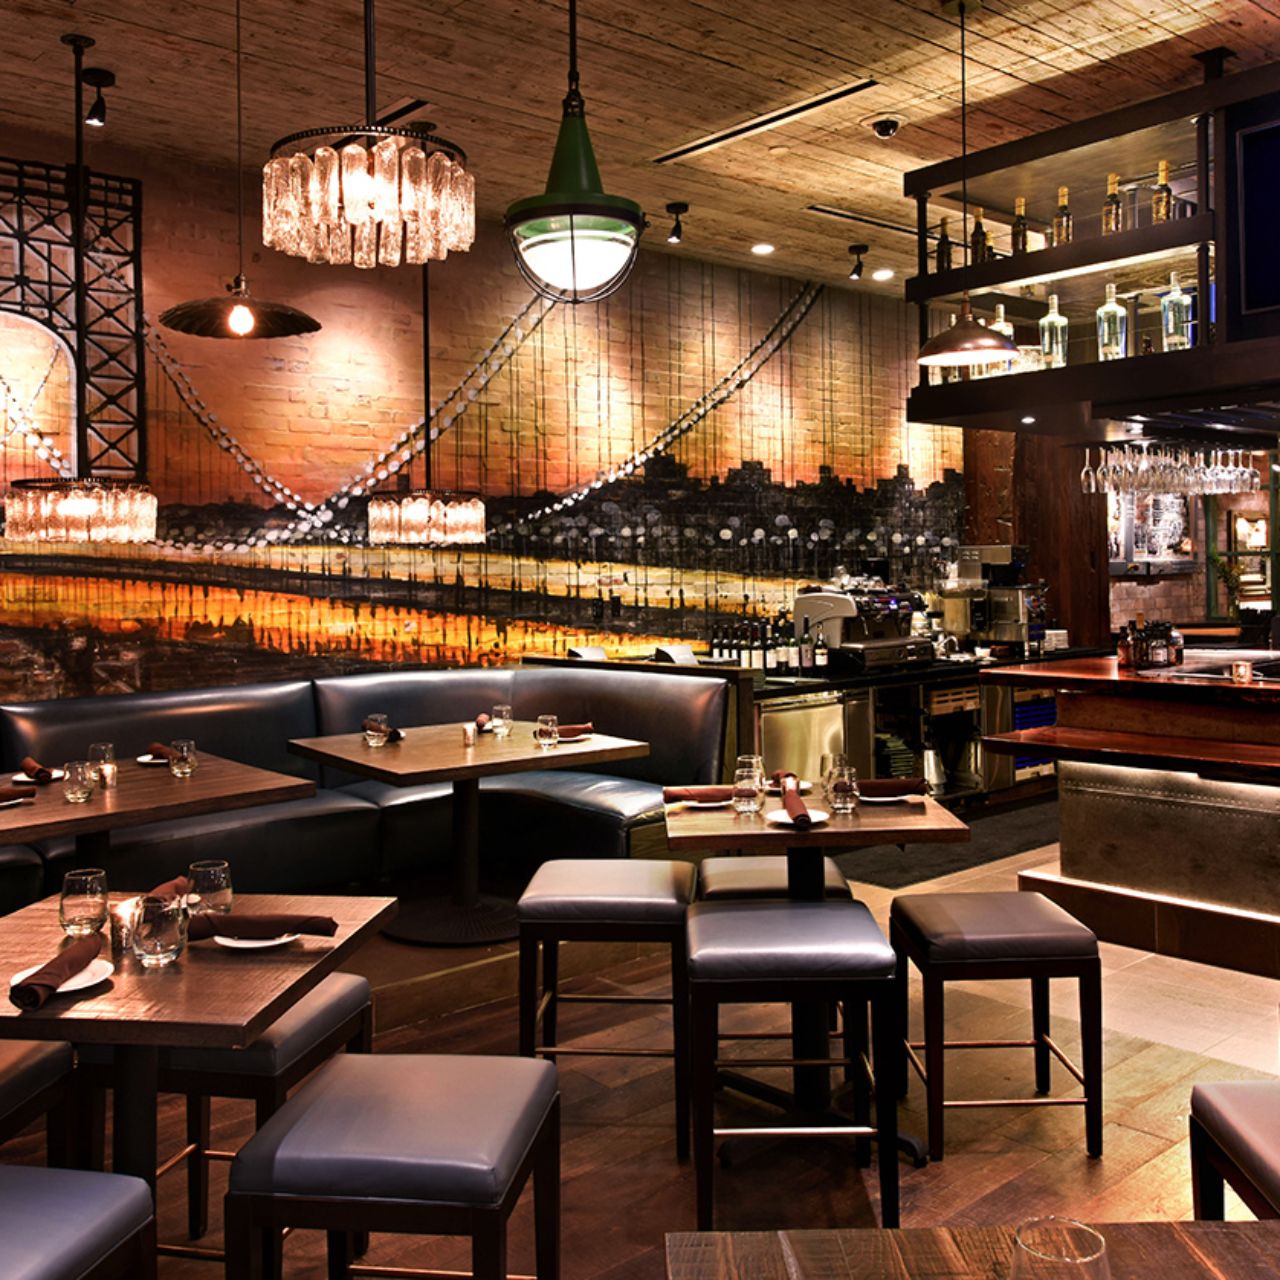 City Perch Kitchen + Bar – Fort Lee Restaurant - Fort Lee, NJ | OpenTable